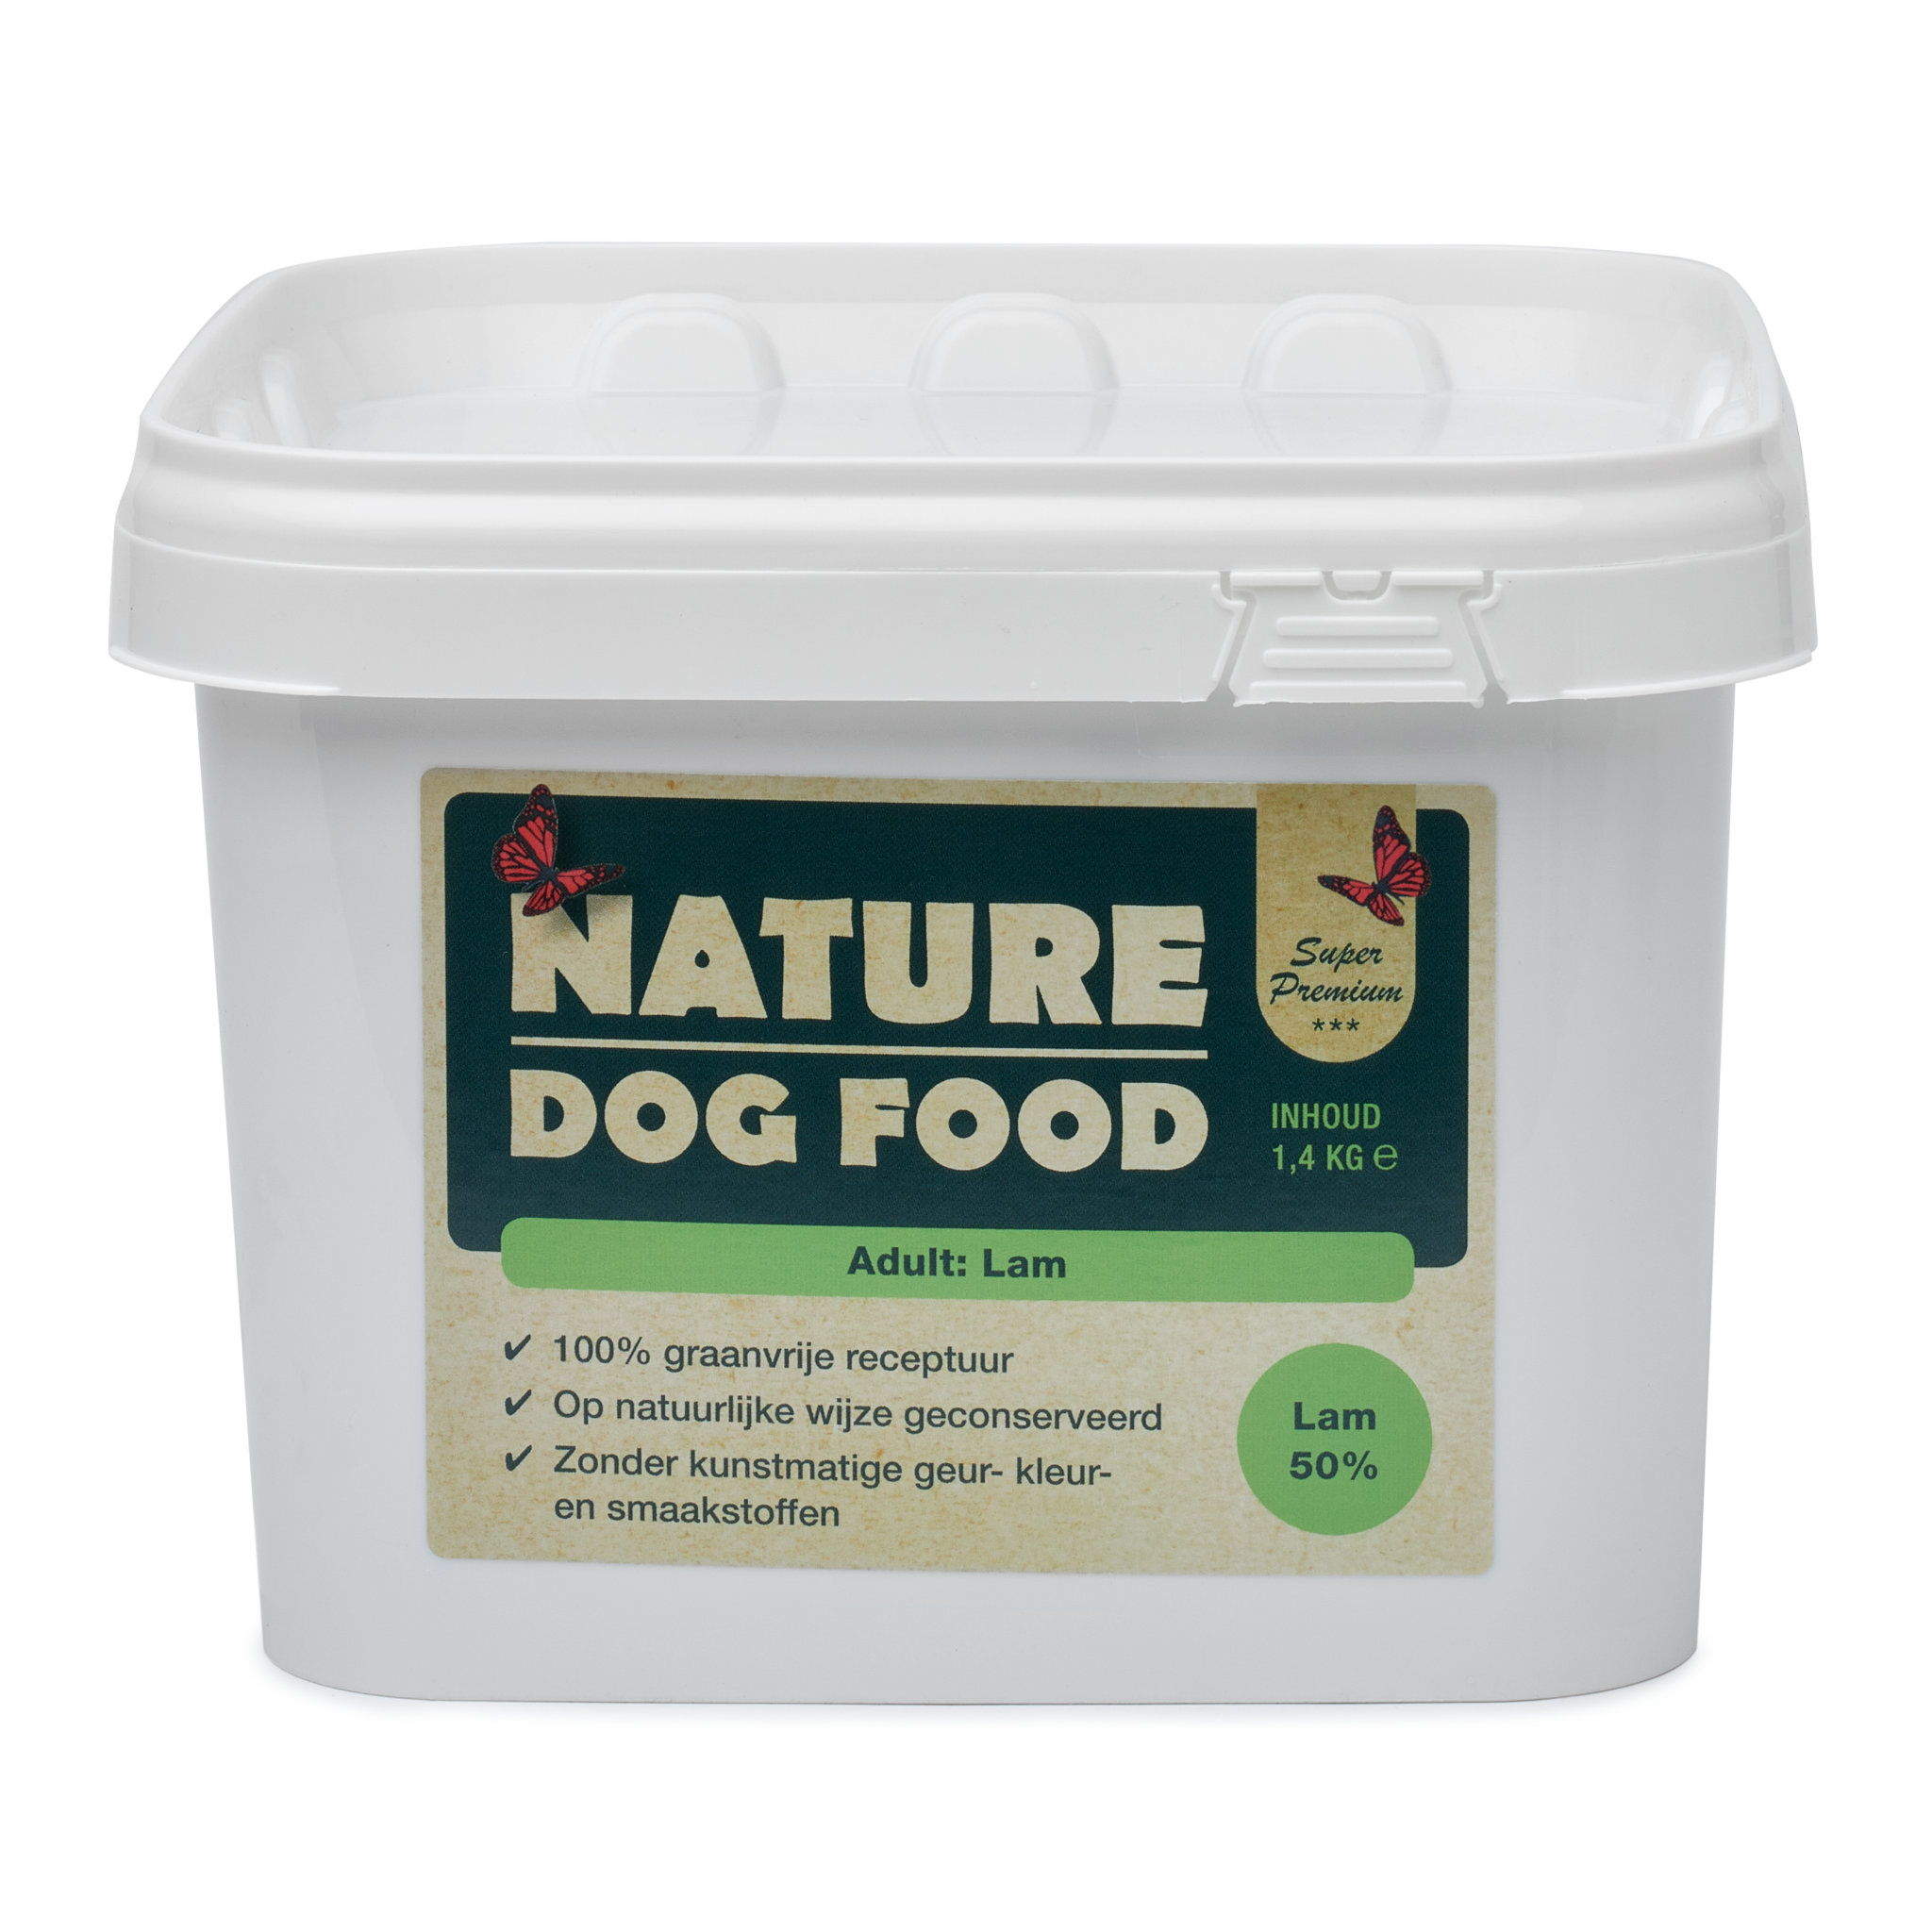 Hondenvoer met lam - Nature Dog Food